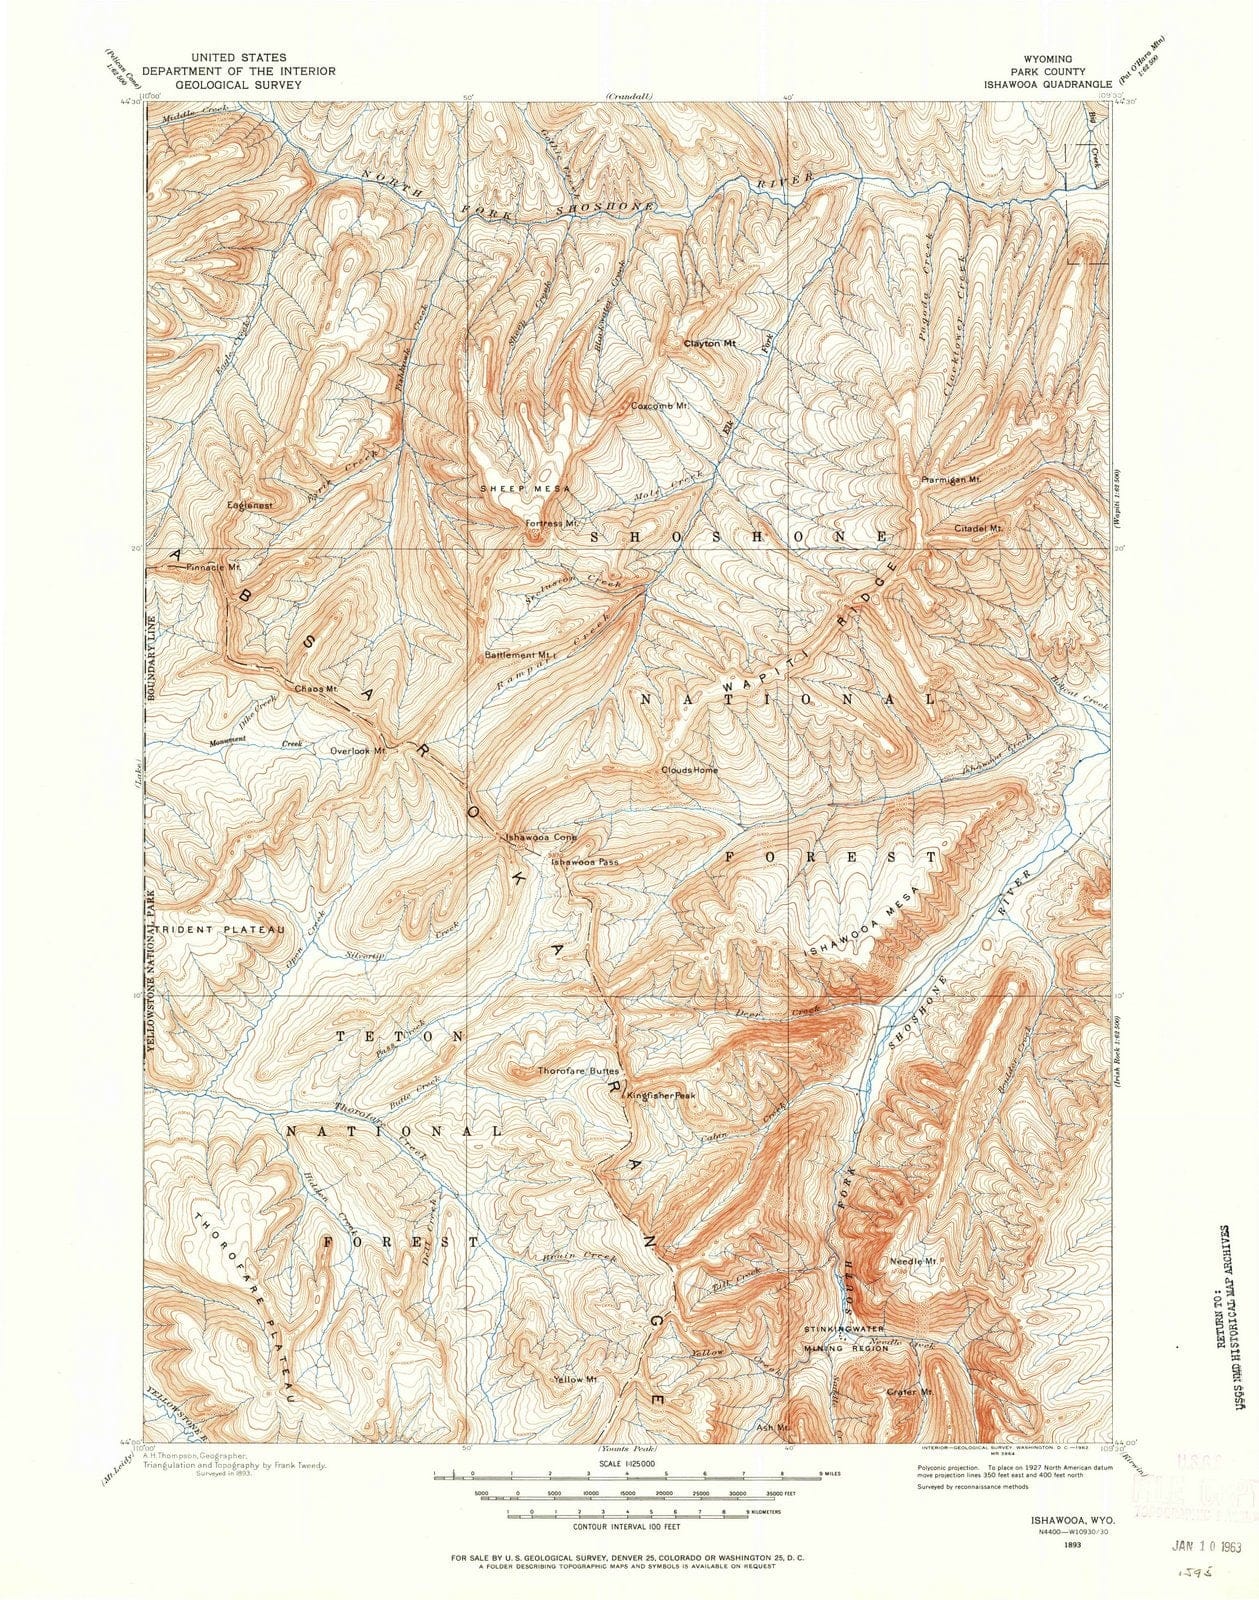 1893 Ishawooa, WY - Wyoming - USGS Topographic Map